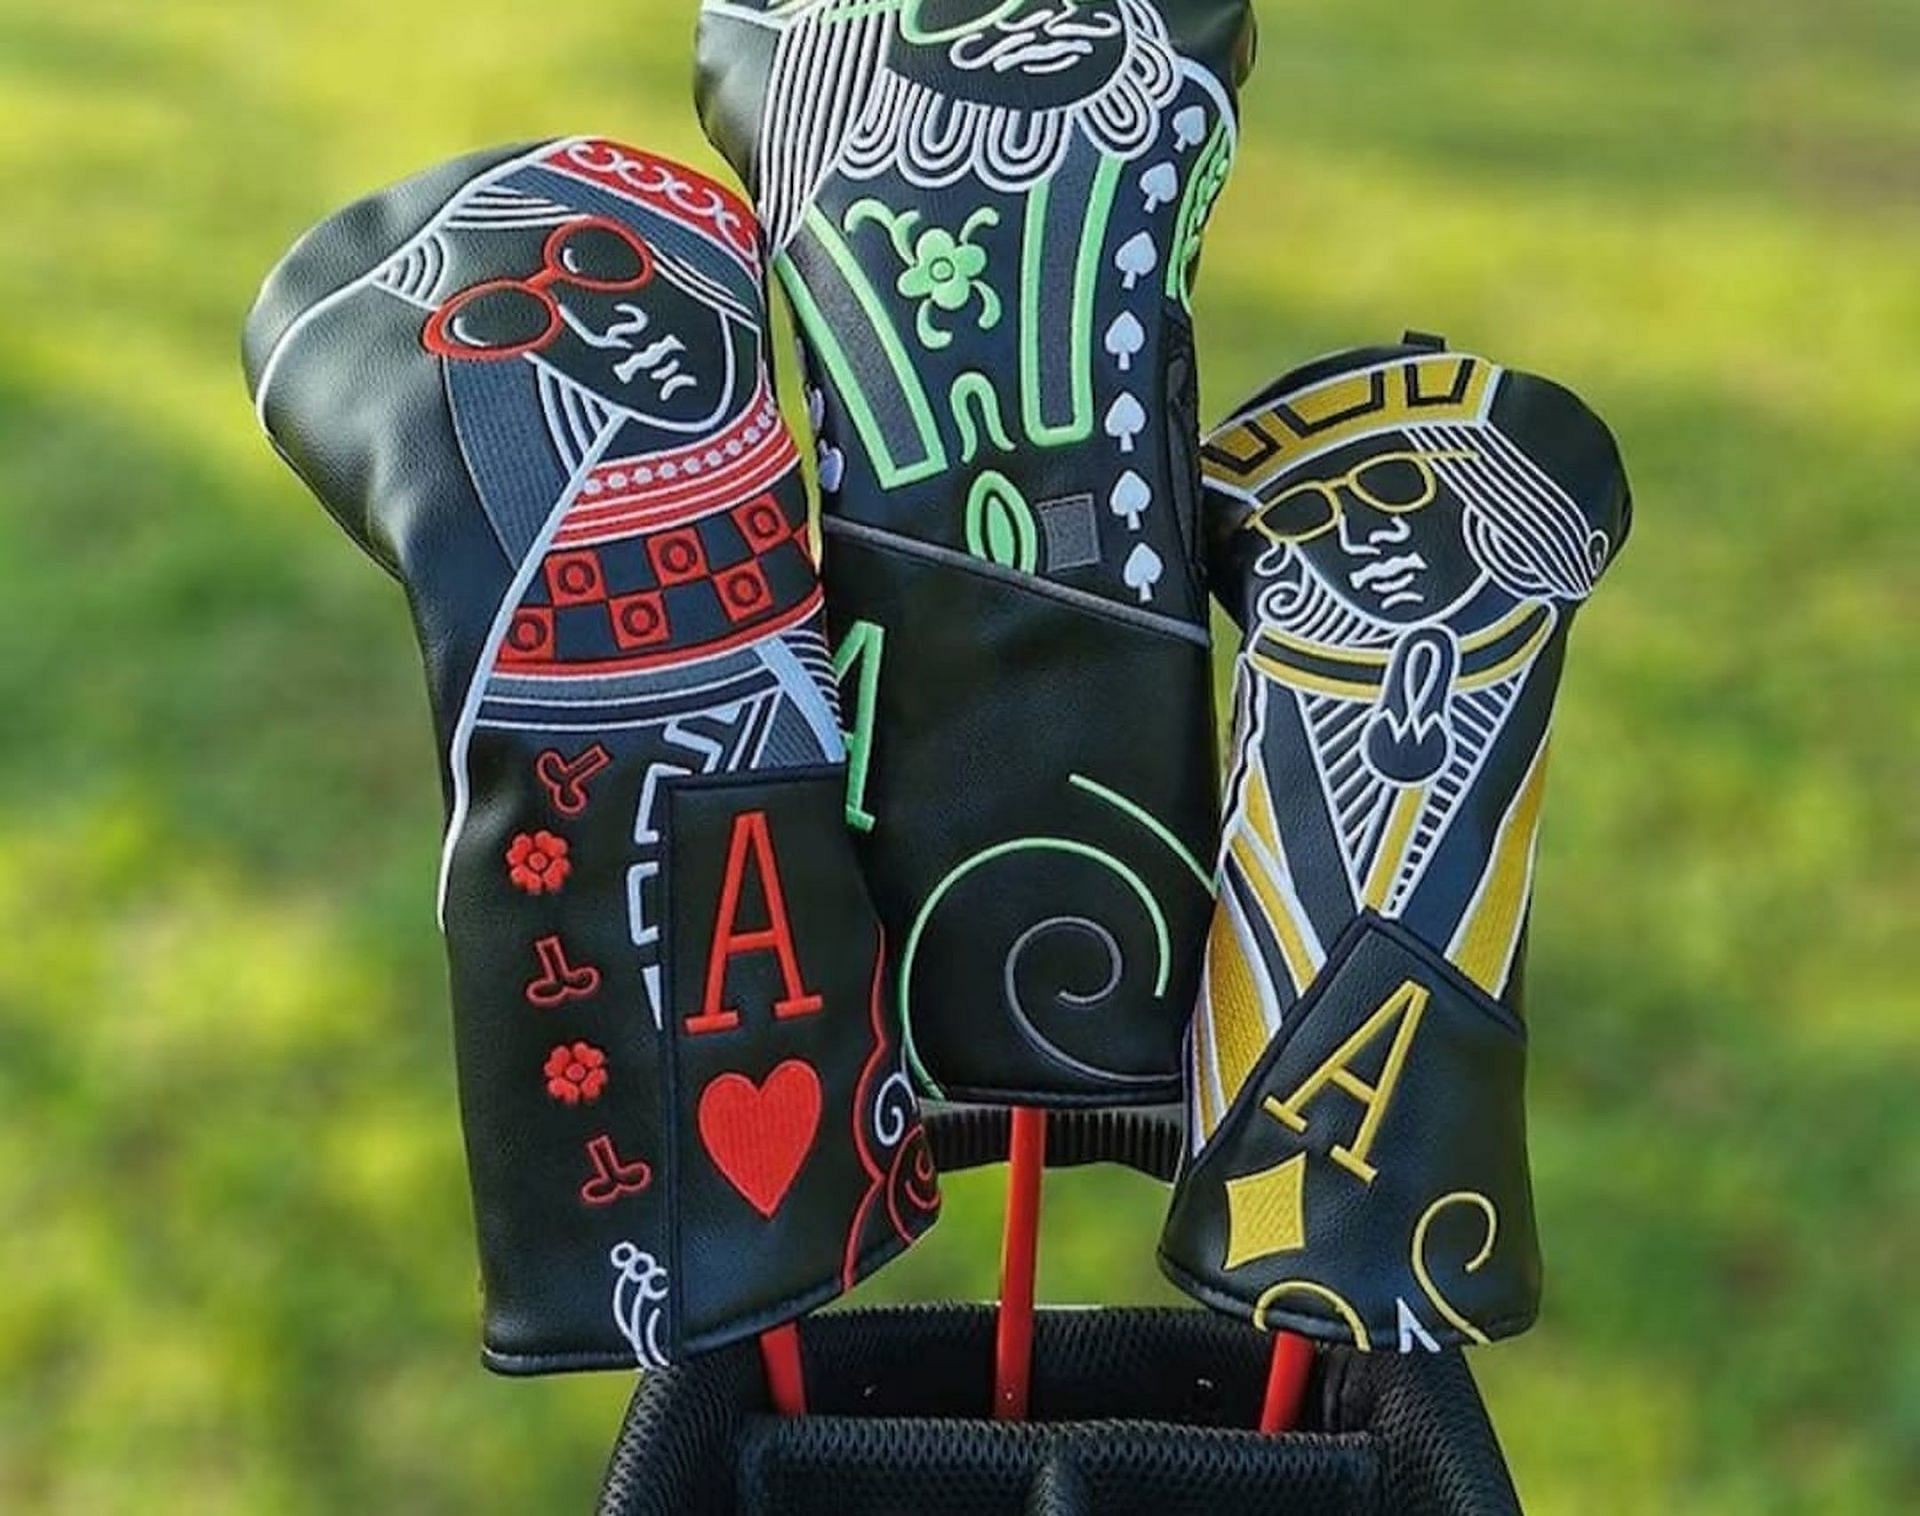 King and Queens Golf Head Cover Set (Image via Etsy.com)